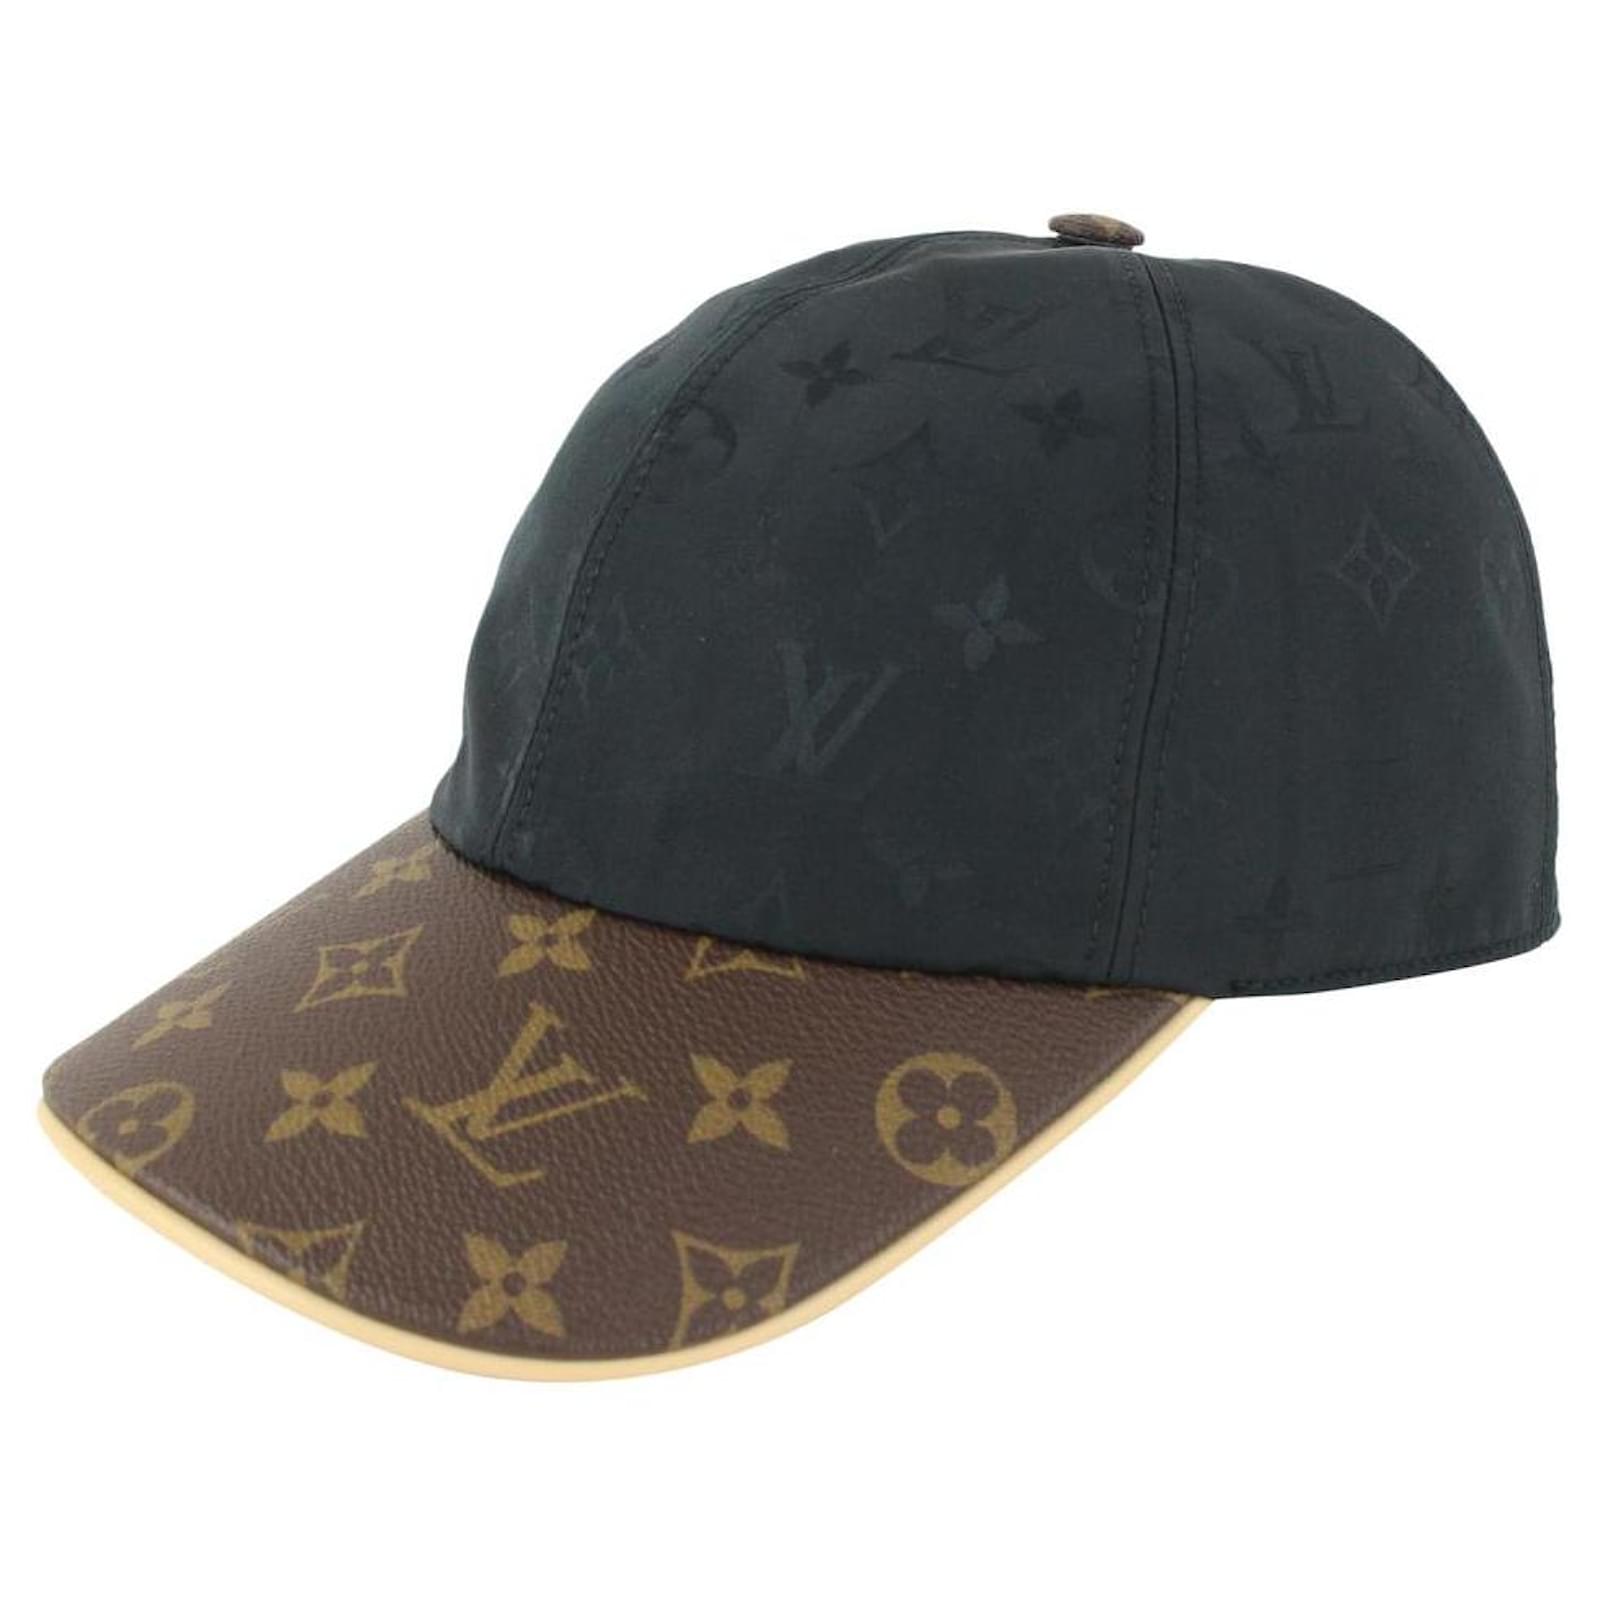 Louis Vuitton Large Brown x Black Monogram Cap ou Pas Baseball Hat